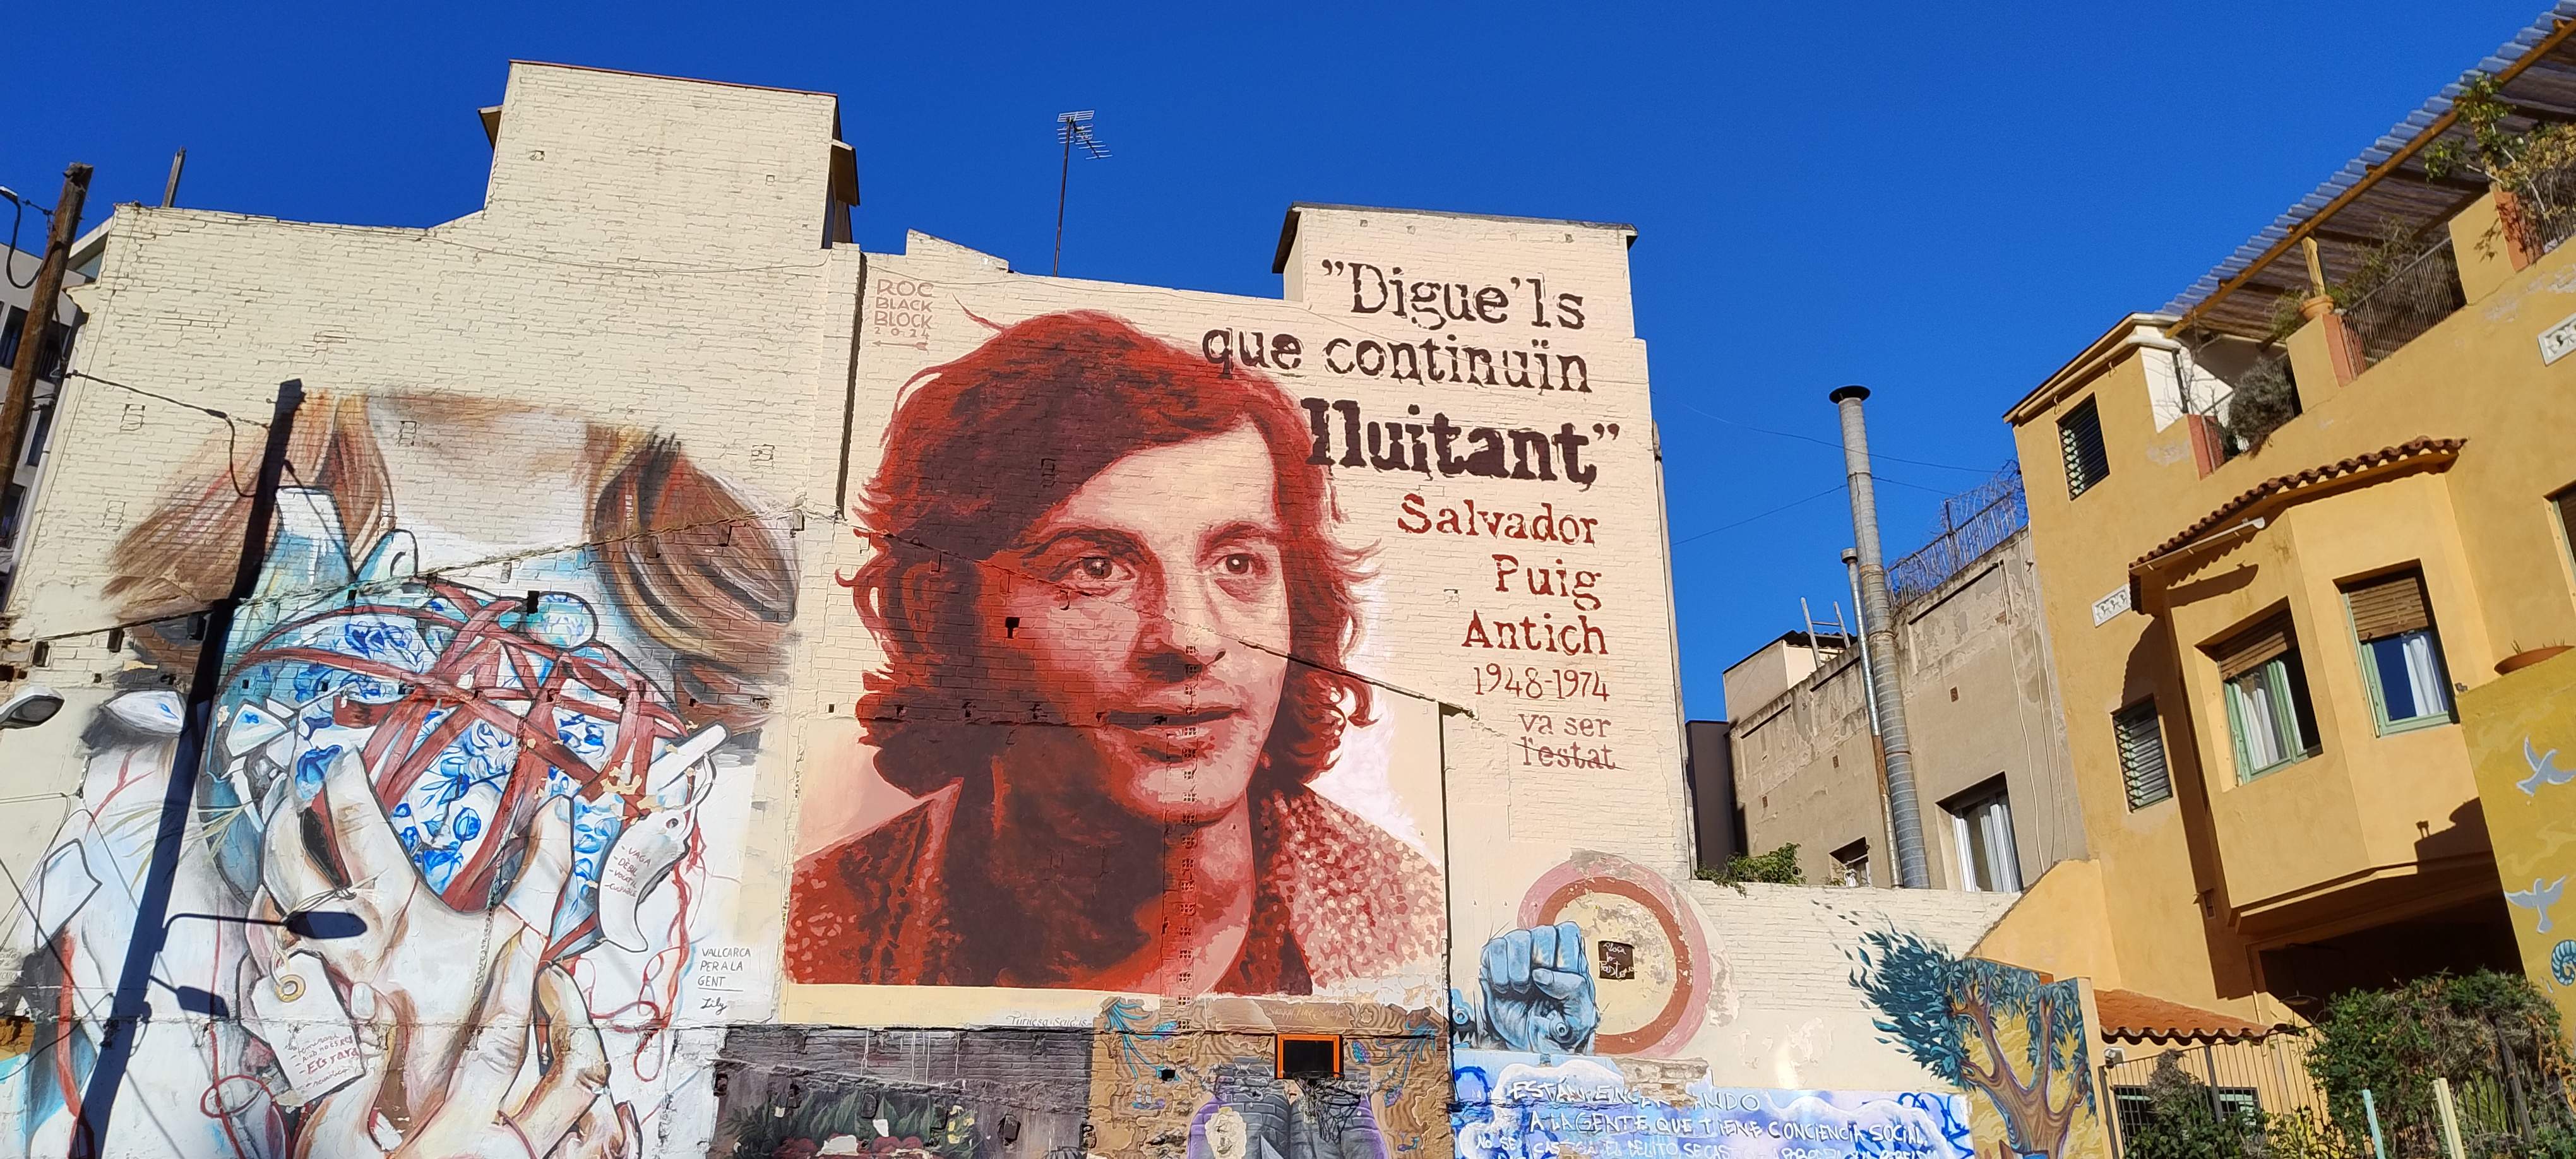 Vallcarca homenajea a Puig Antich con un mural de Roc Blackbloc